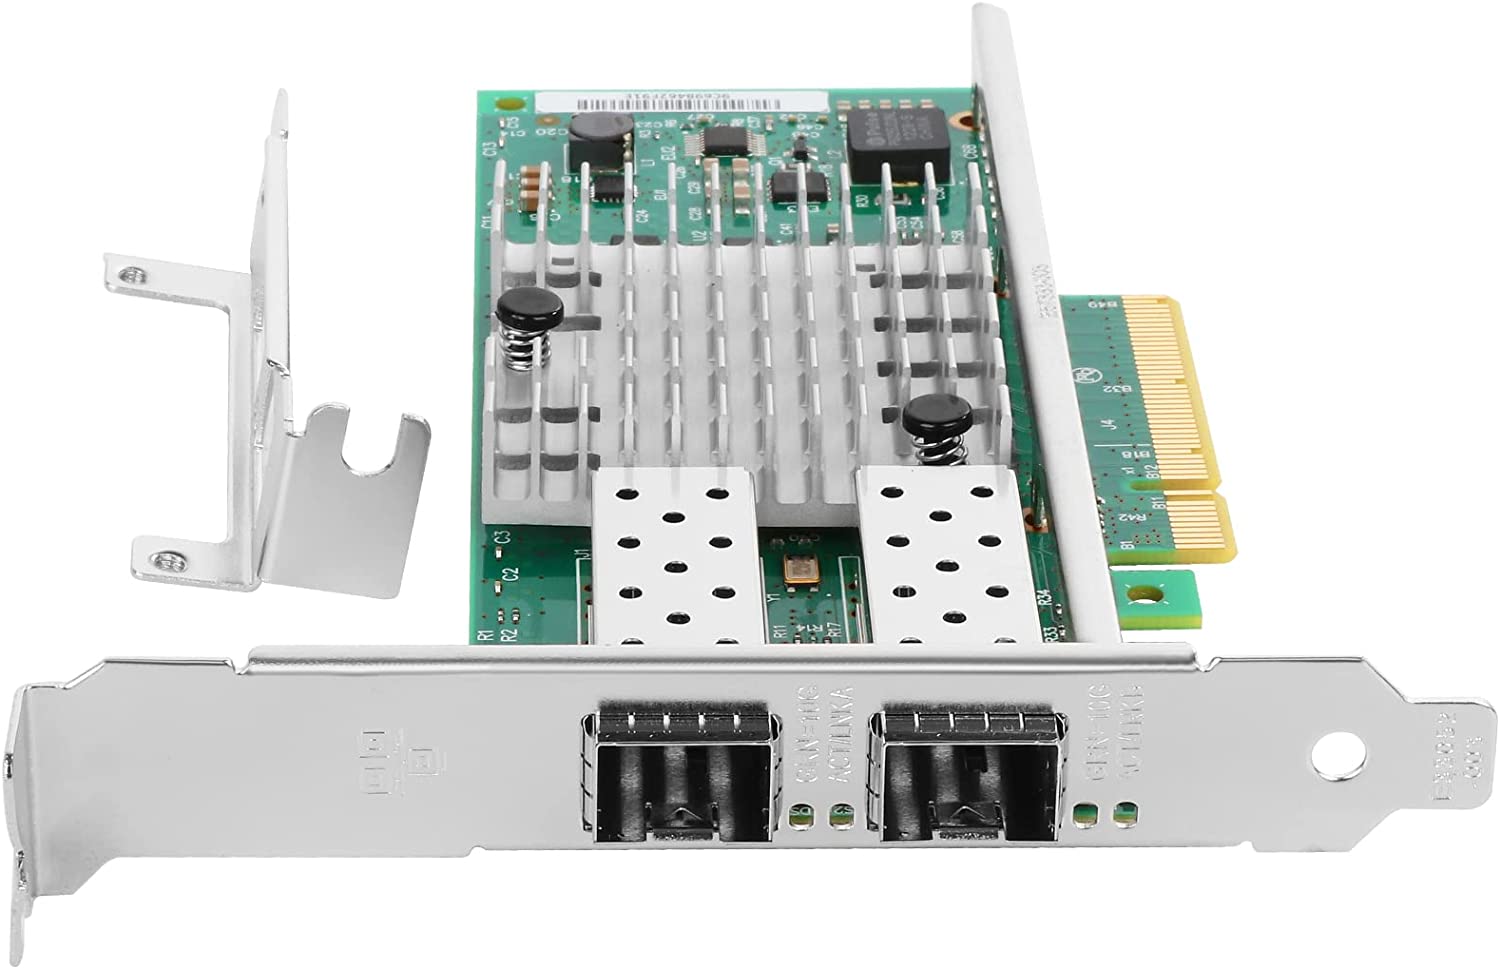 Elfcam®- Carte Ethernet 10Gb SFP+, avec Intel X520-DA2/ X520-SR2-82599ES  Chip, 10Go PCI Express x8 LAN Adapter, 10GbE NIC pour Windows Server,  Win7/8/10, Linux, 2x Ports 10G SFP+ (Réf: 12012) – Elfcam 